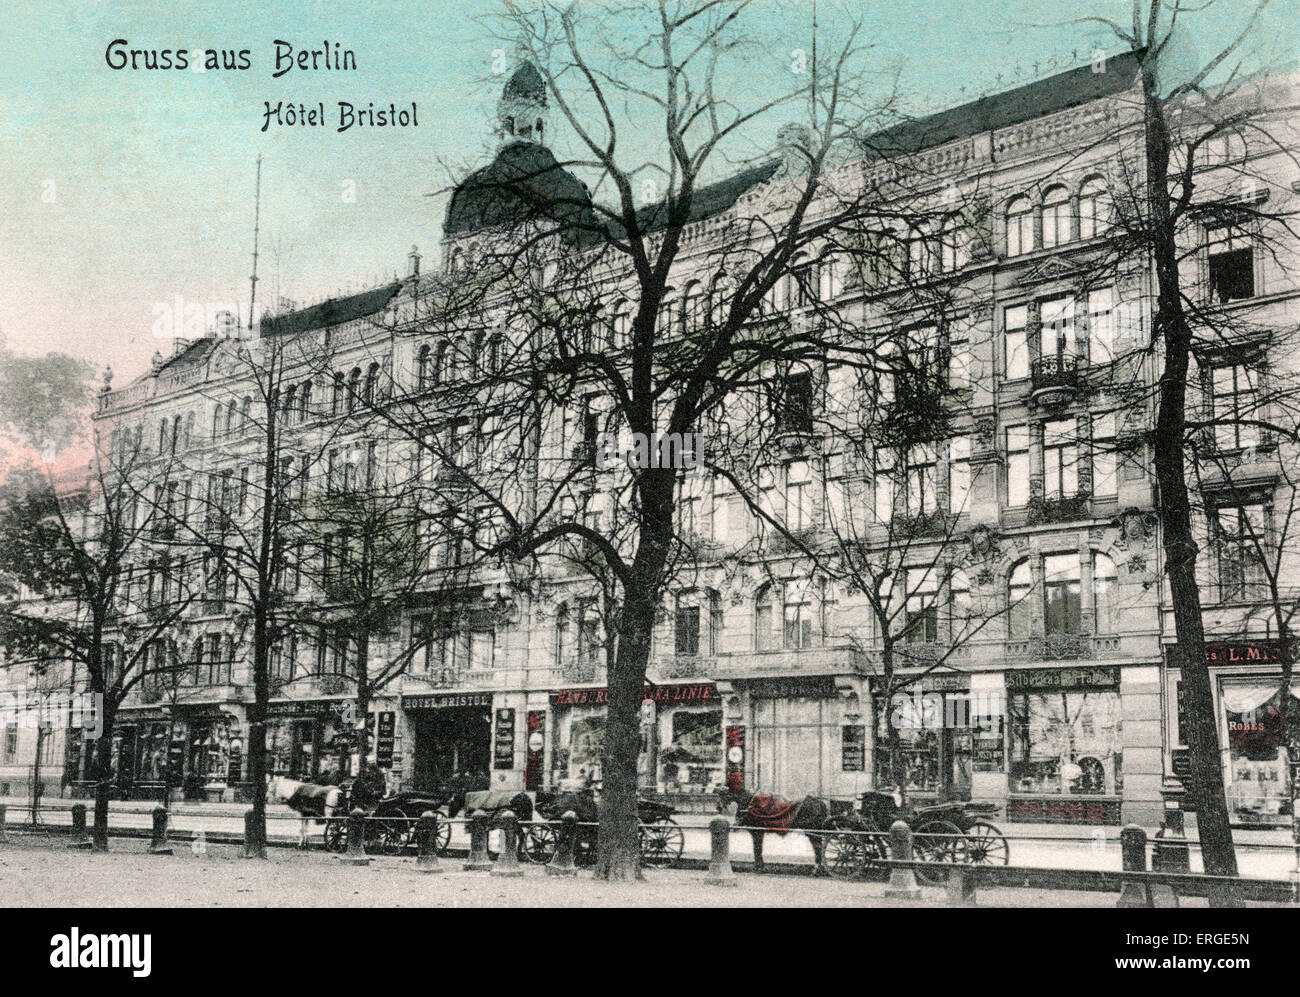 Hotel Bristol, Berlin, Germany (early 20th century). Stock Photo